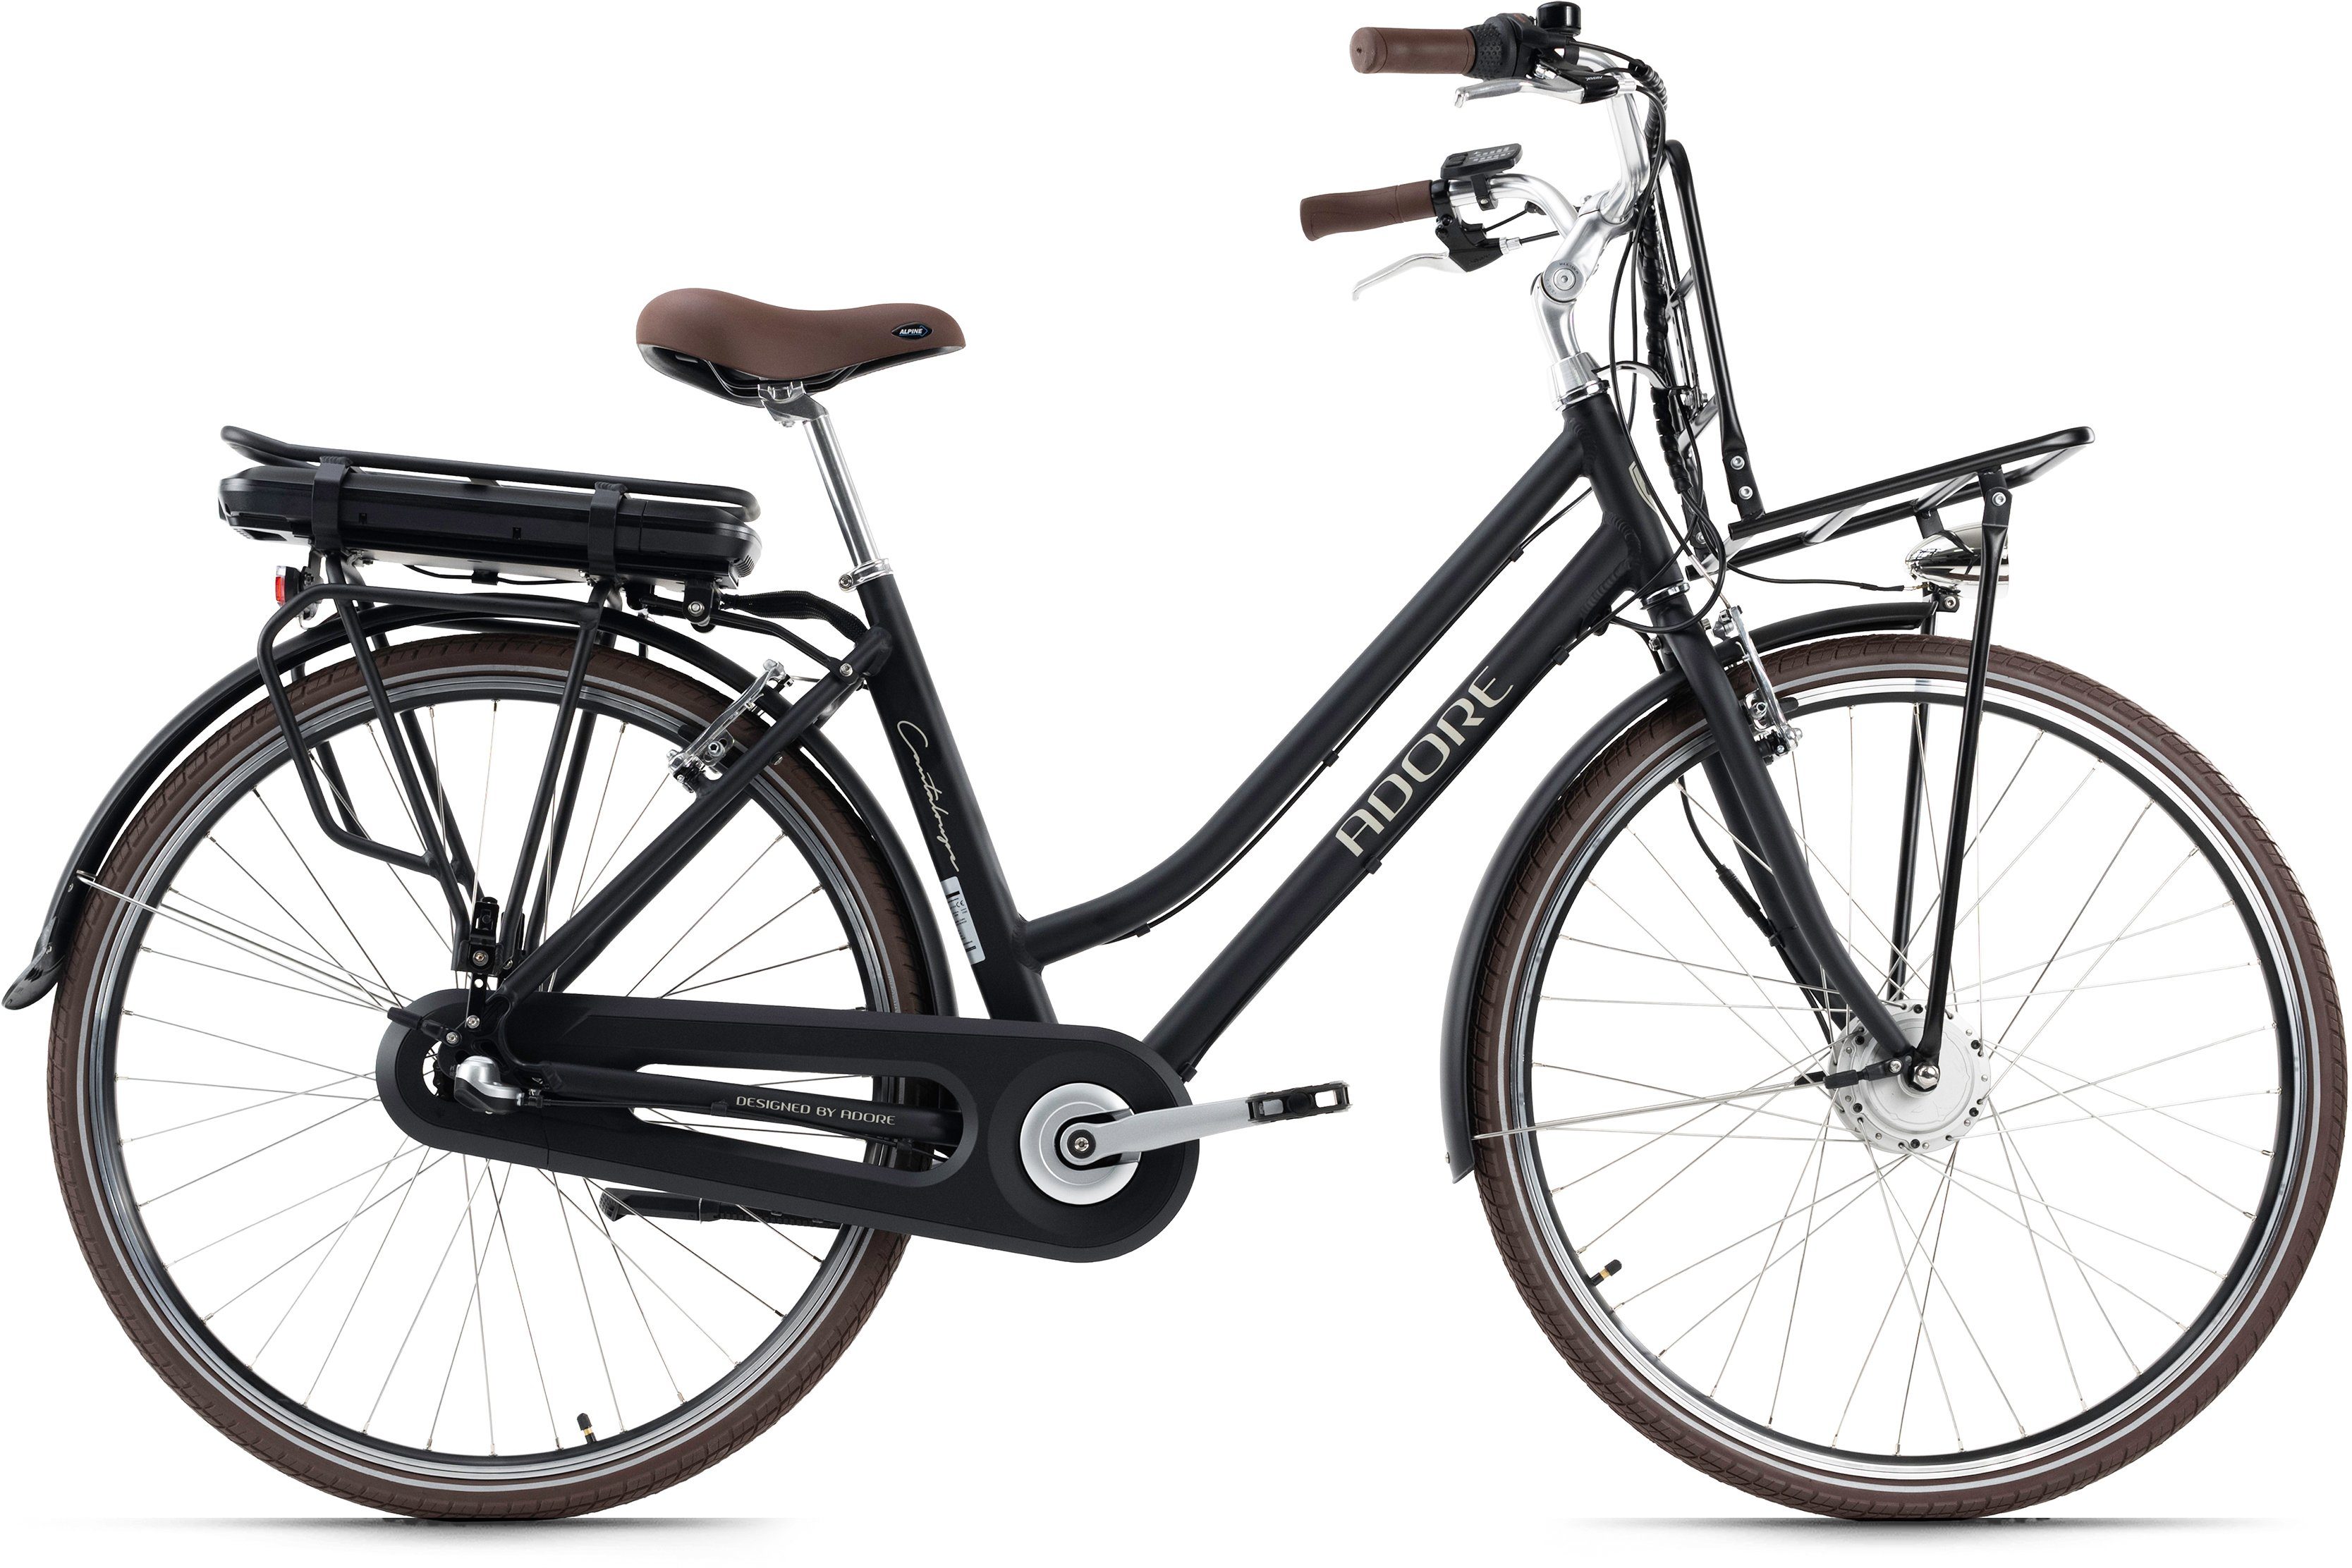 Hollandrad E-Bike kaufen auf Hollandrad24.de ➡️